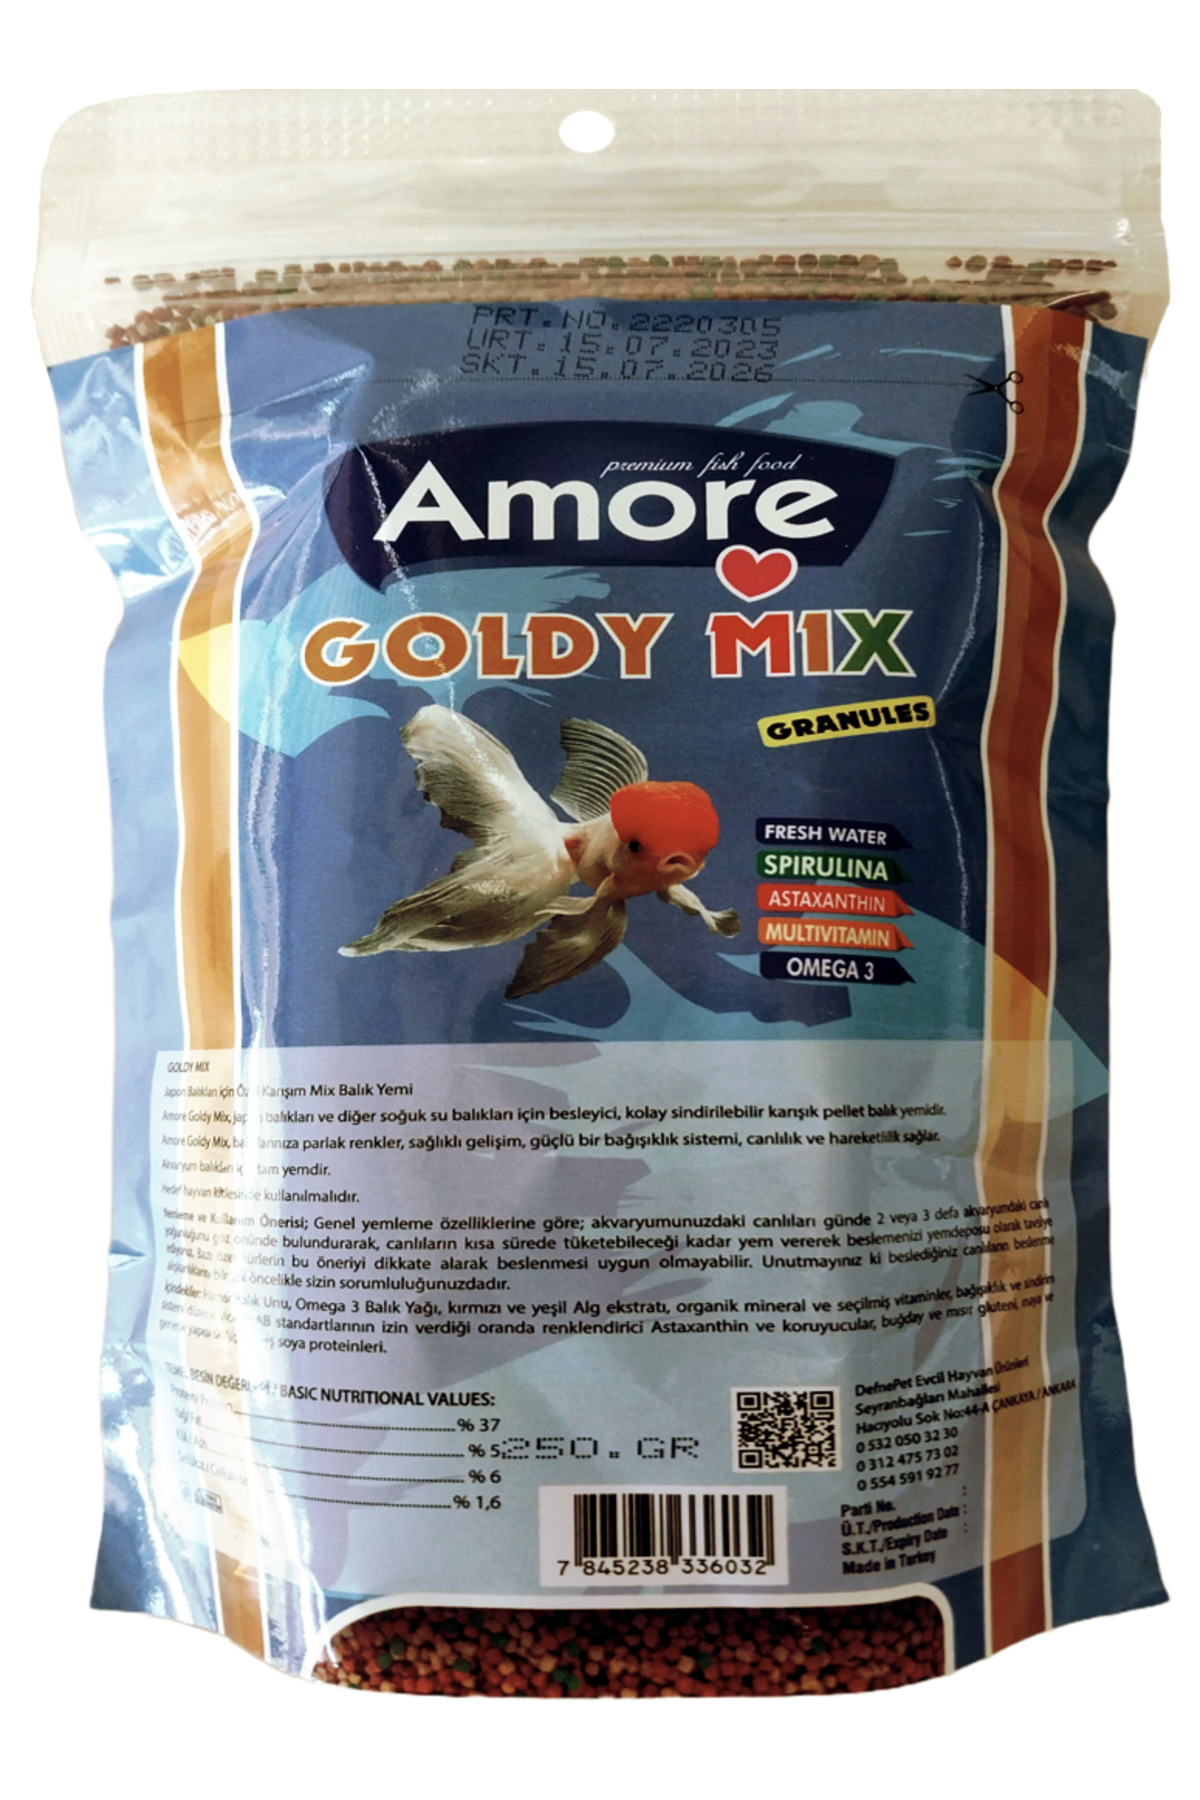 Amore Goldy Mix %37 Protein 250 gr Kajero Japon Yemi ve 1 kg AHM Mix Pond Sticks Poset Balik Yemi